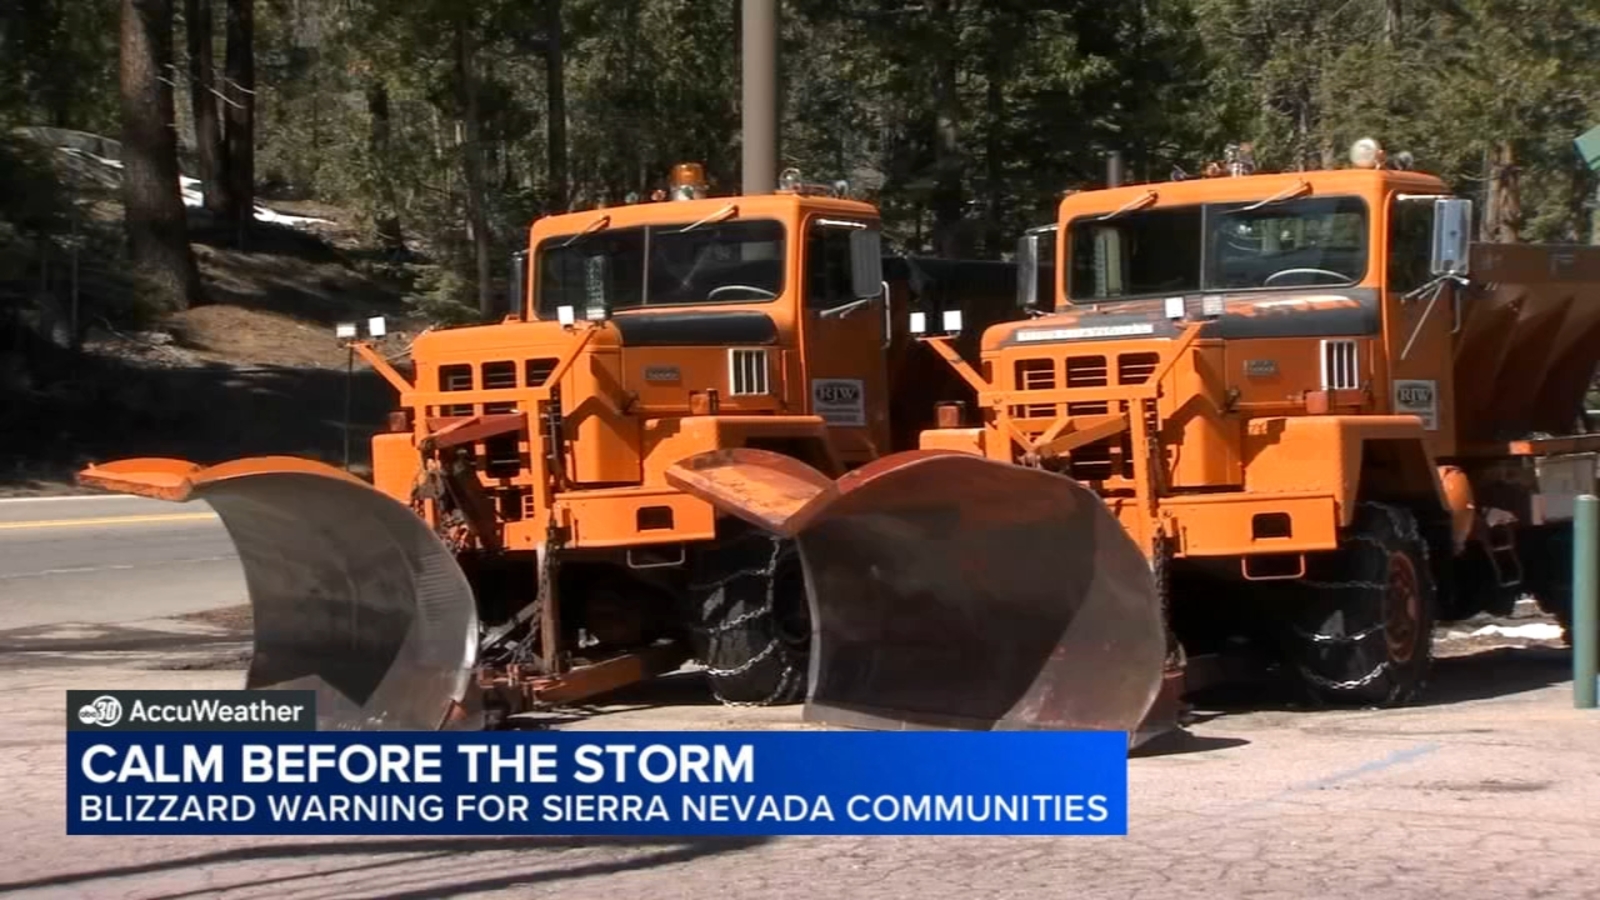 Fresno Co. officials urge preparedness ahead of blizzard warning for Sierra Nevada [Video]